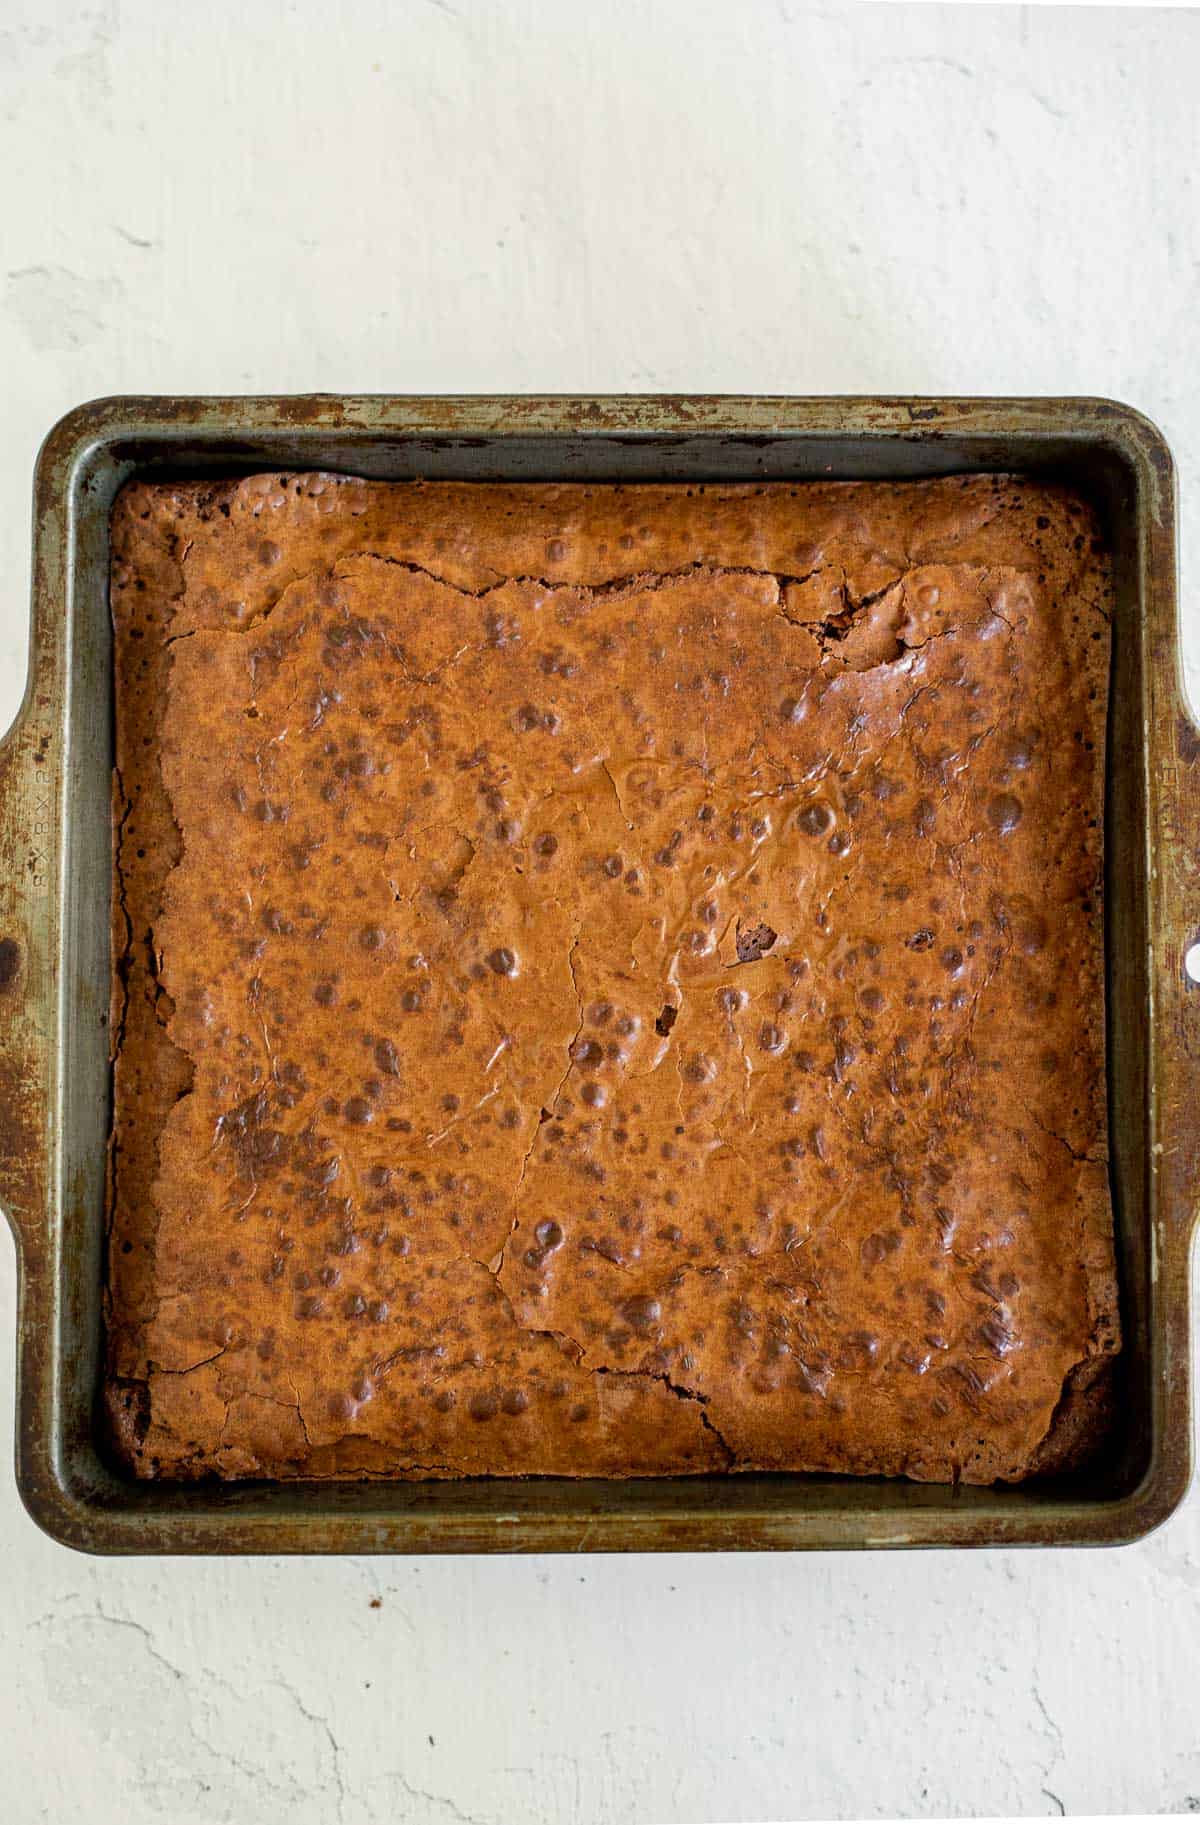 baked black forest brownies in a metal baking pan.